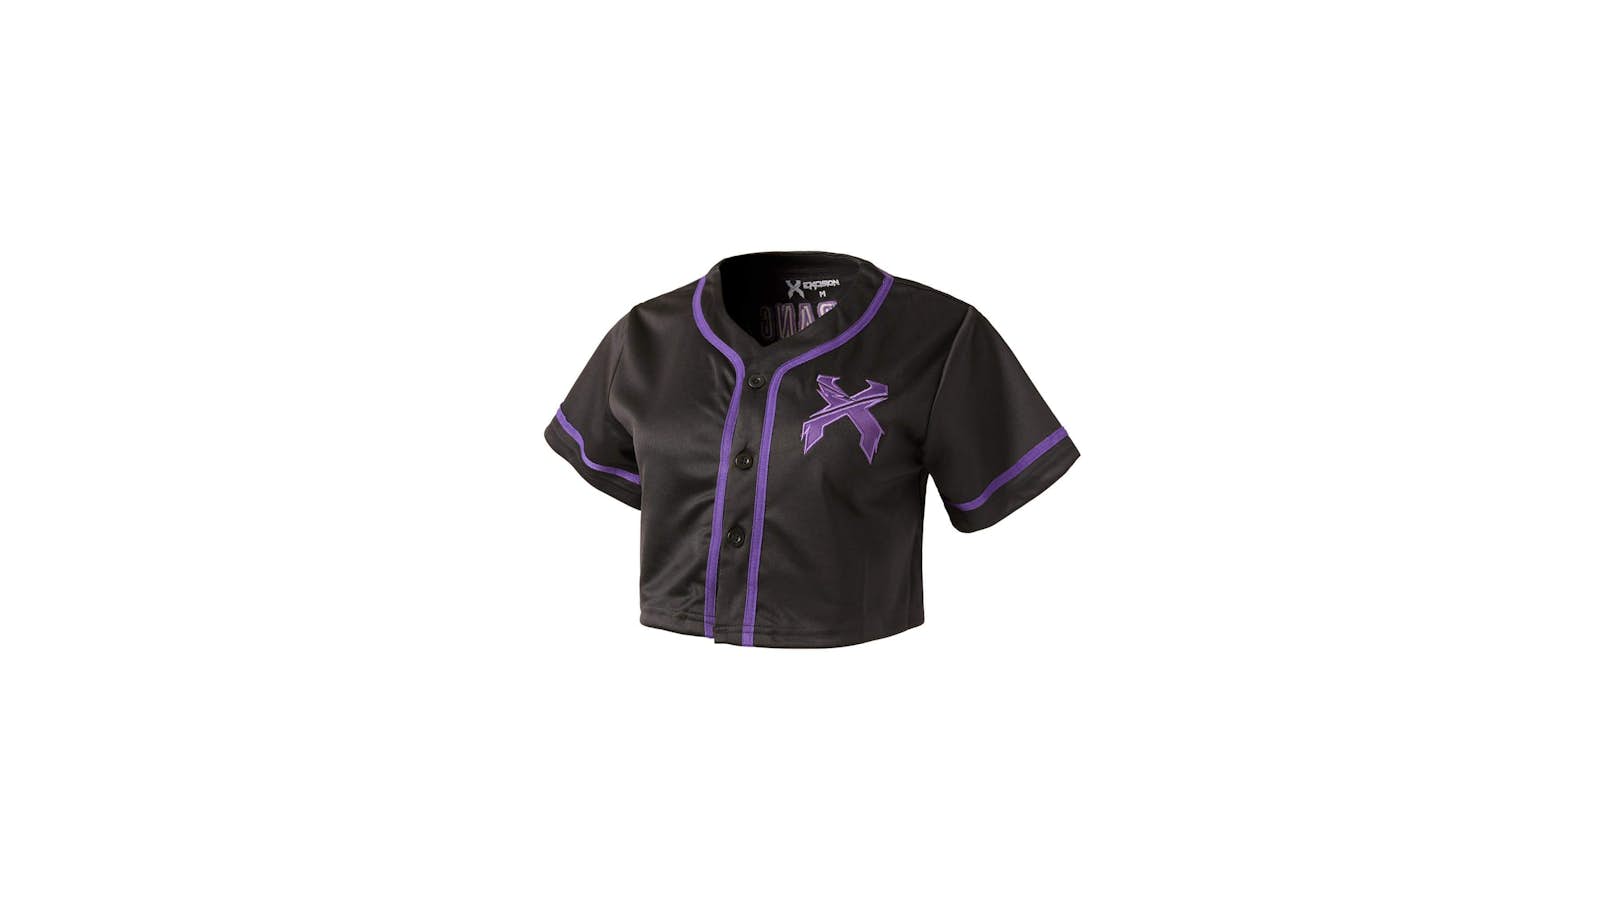 Excision Women's Crop Top Baseball Jersey - Black/Purple